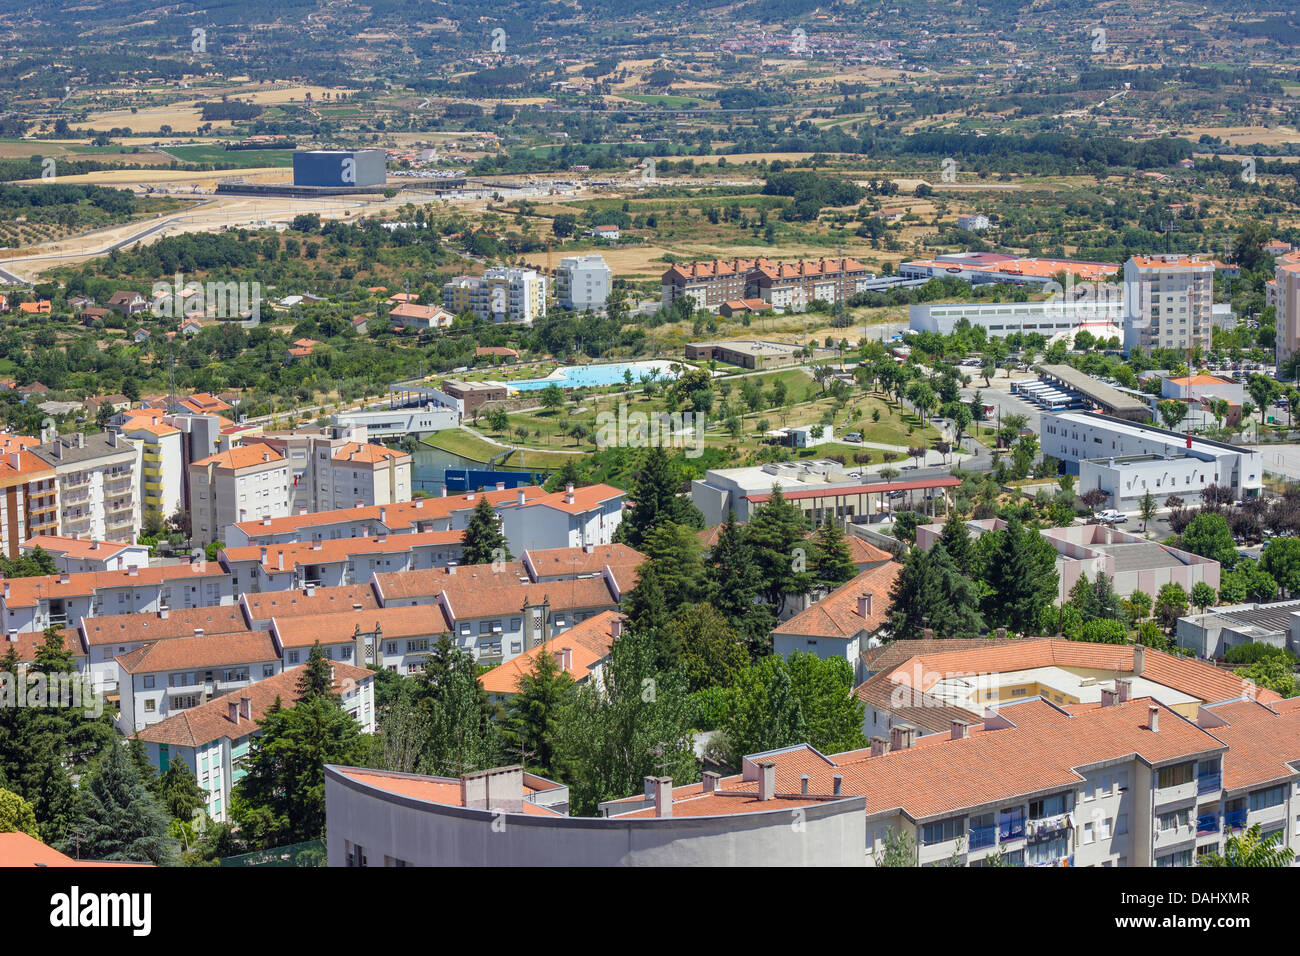 Covilhã landscape with Portugal Telecom Data center Stock Photo